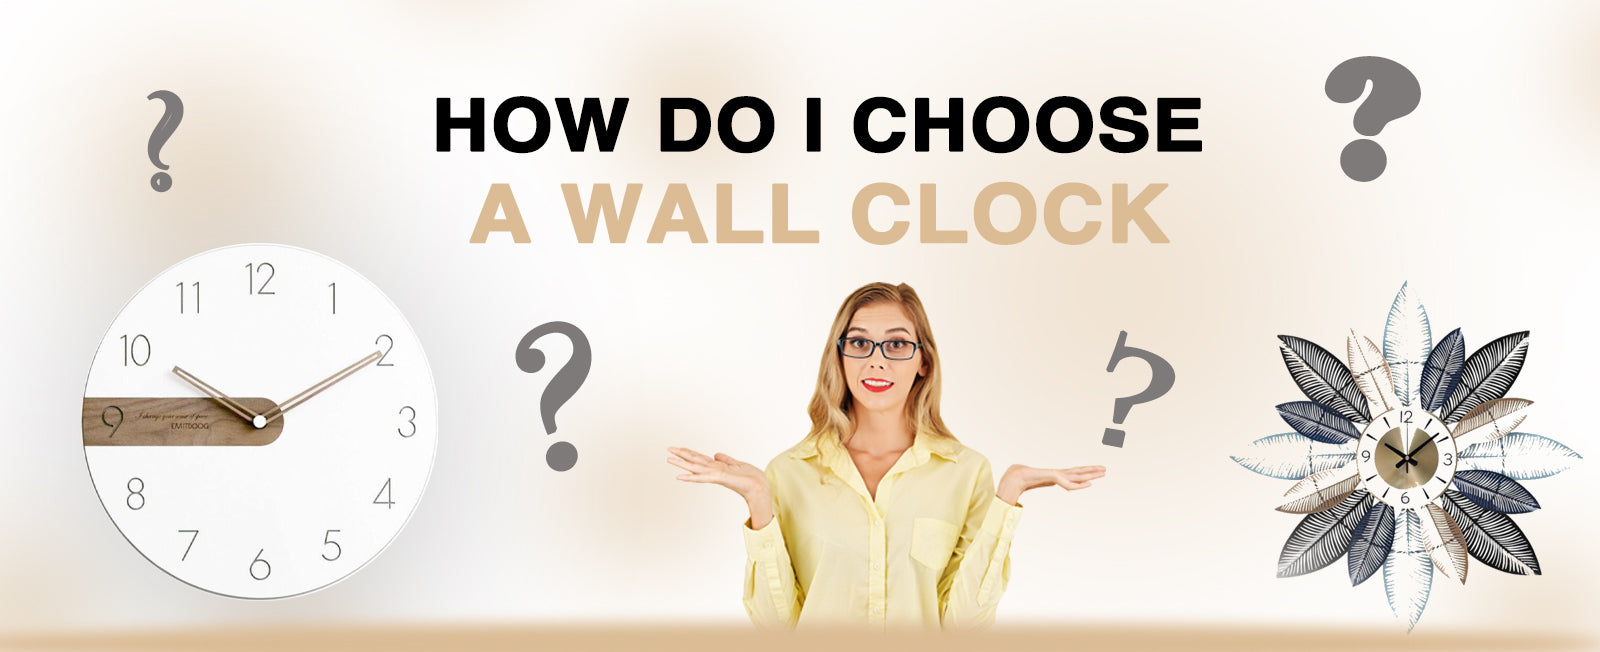 How do I choose a wall clock